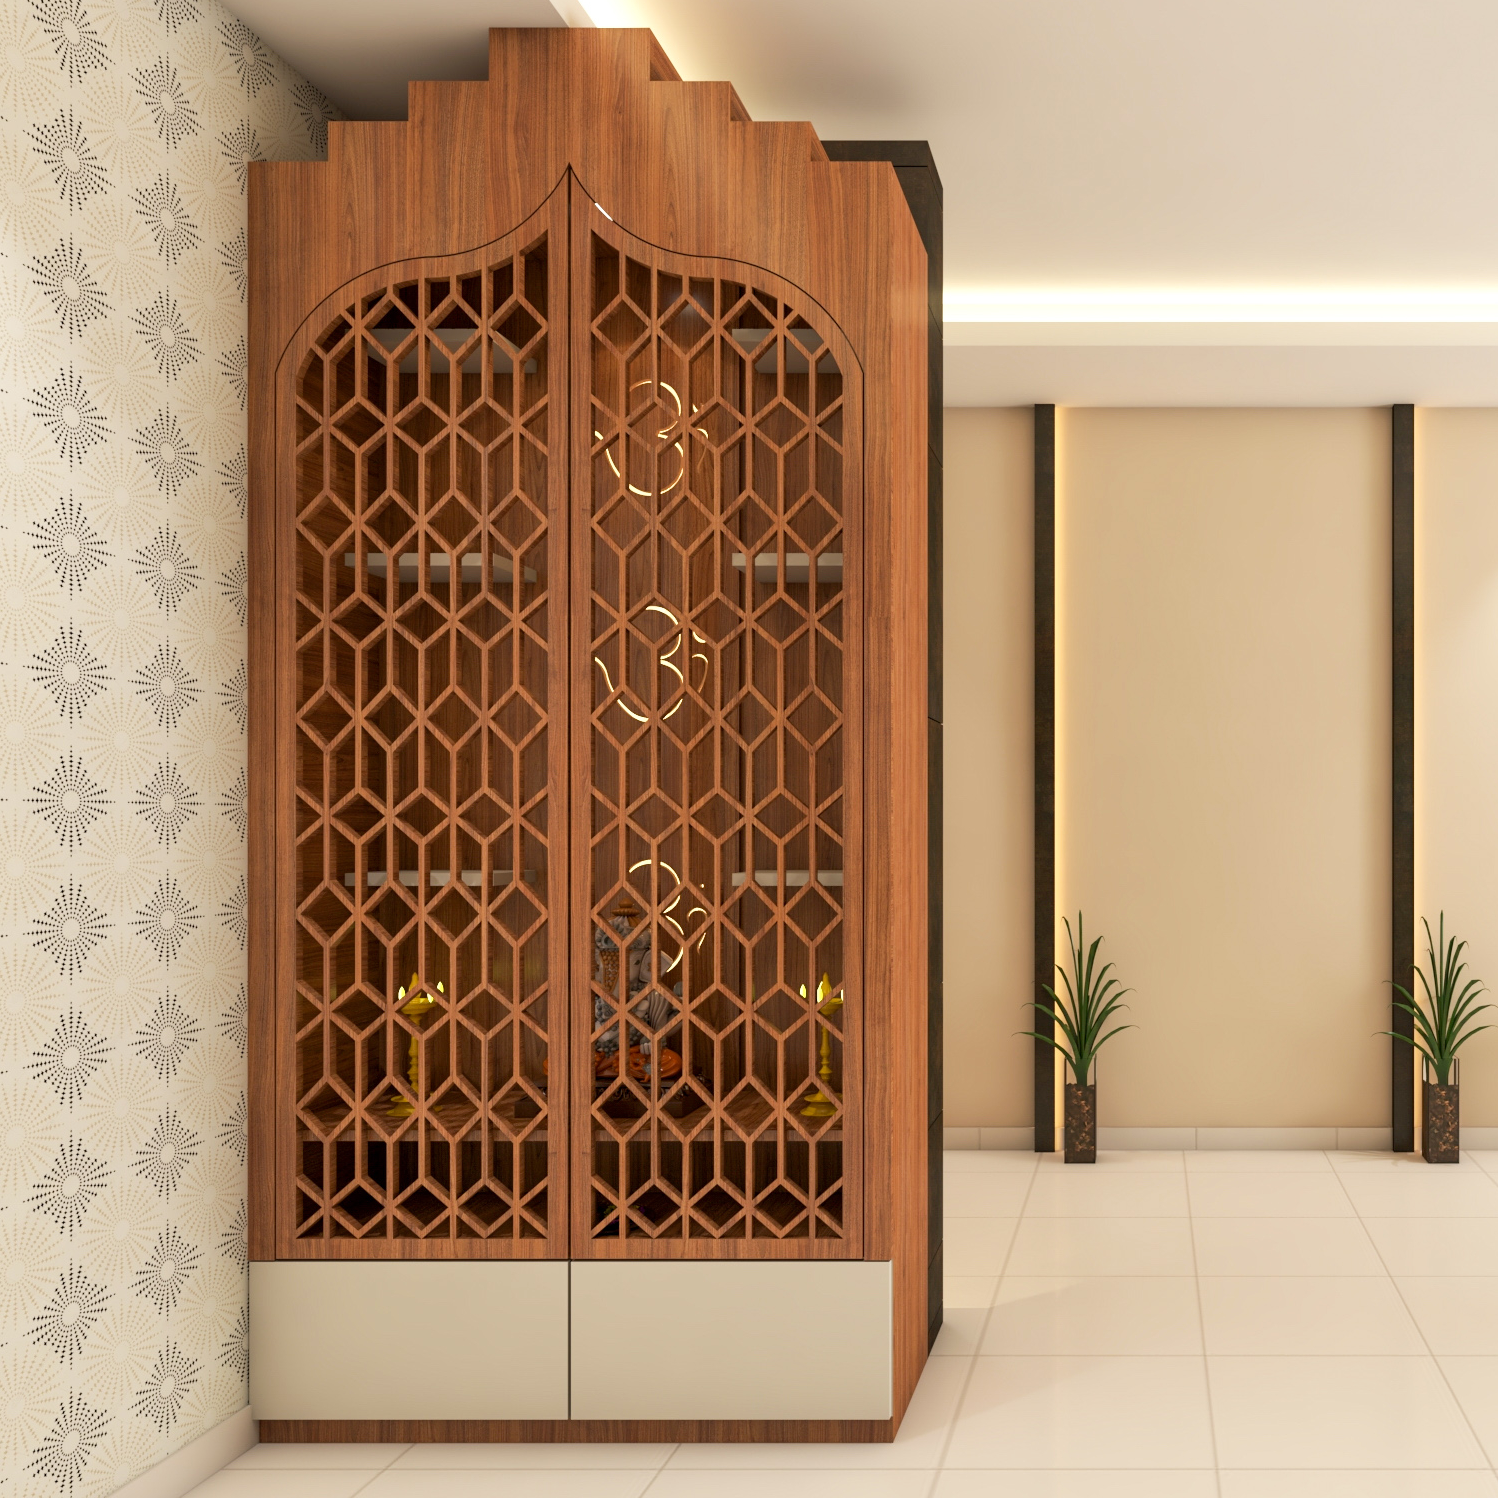 Classic Open Pooja Room Design with Jali Pattern Door and Storage | Livspace